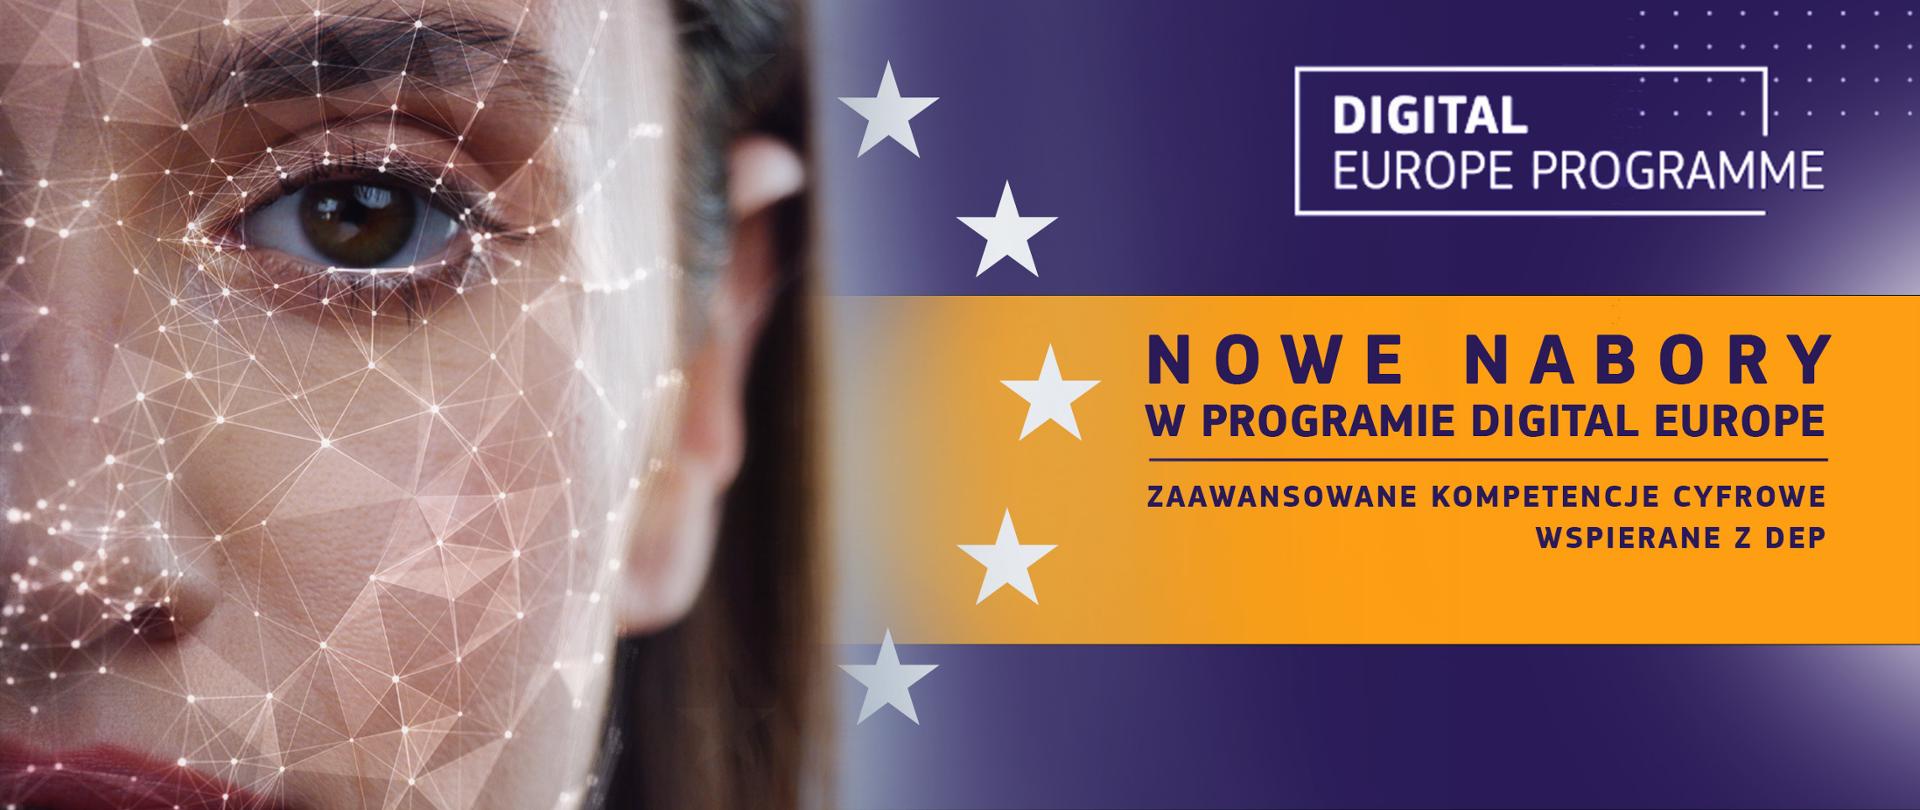 Digital Europe Programm nowe nabory